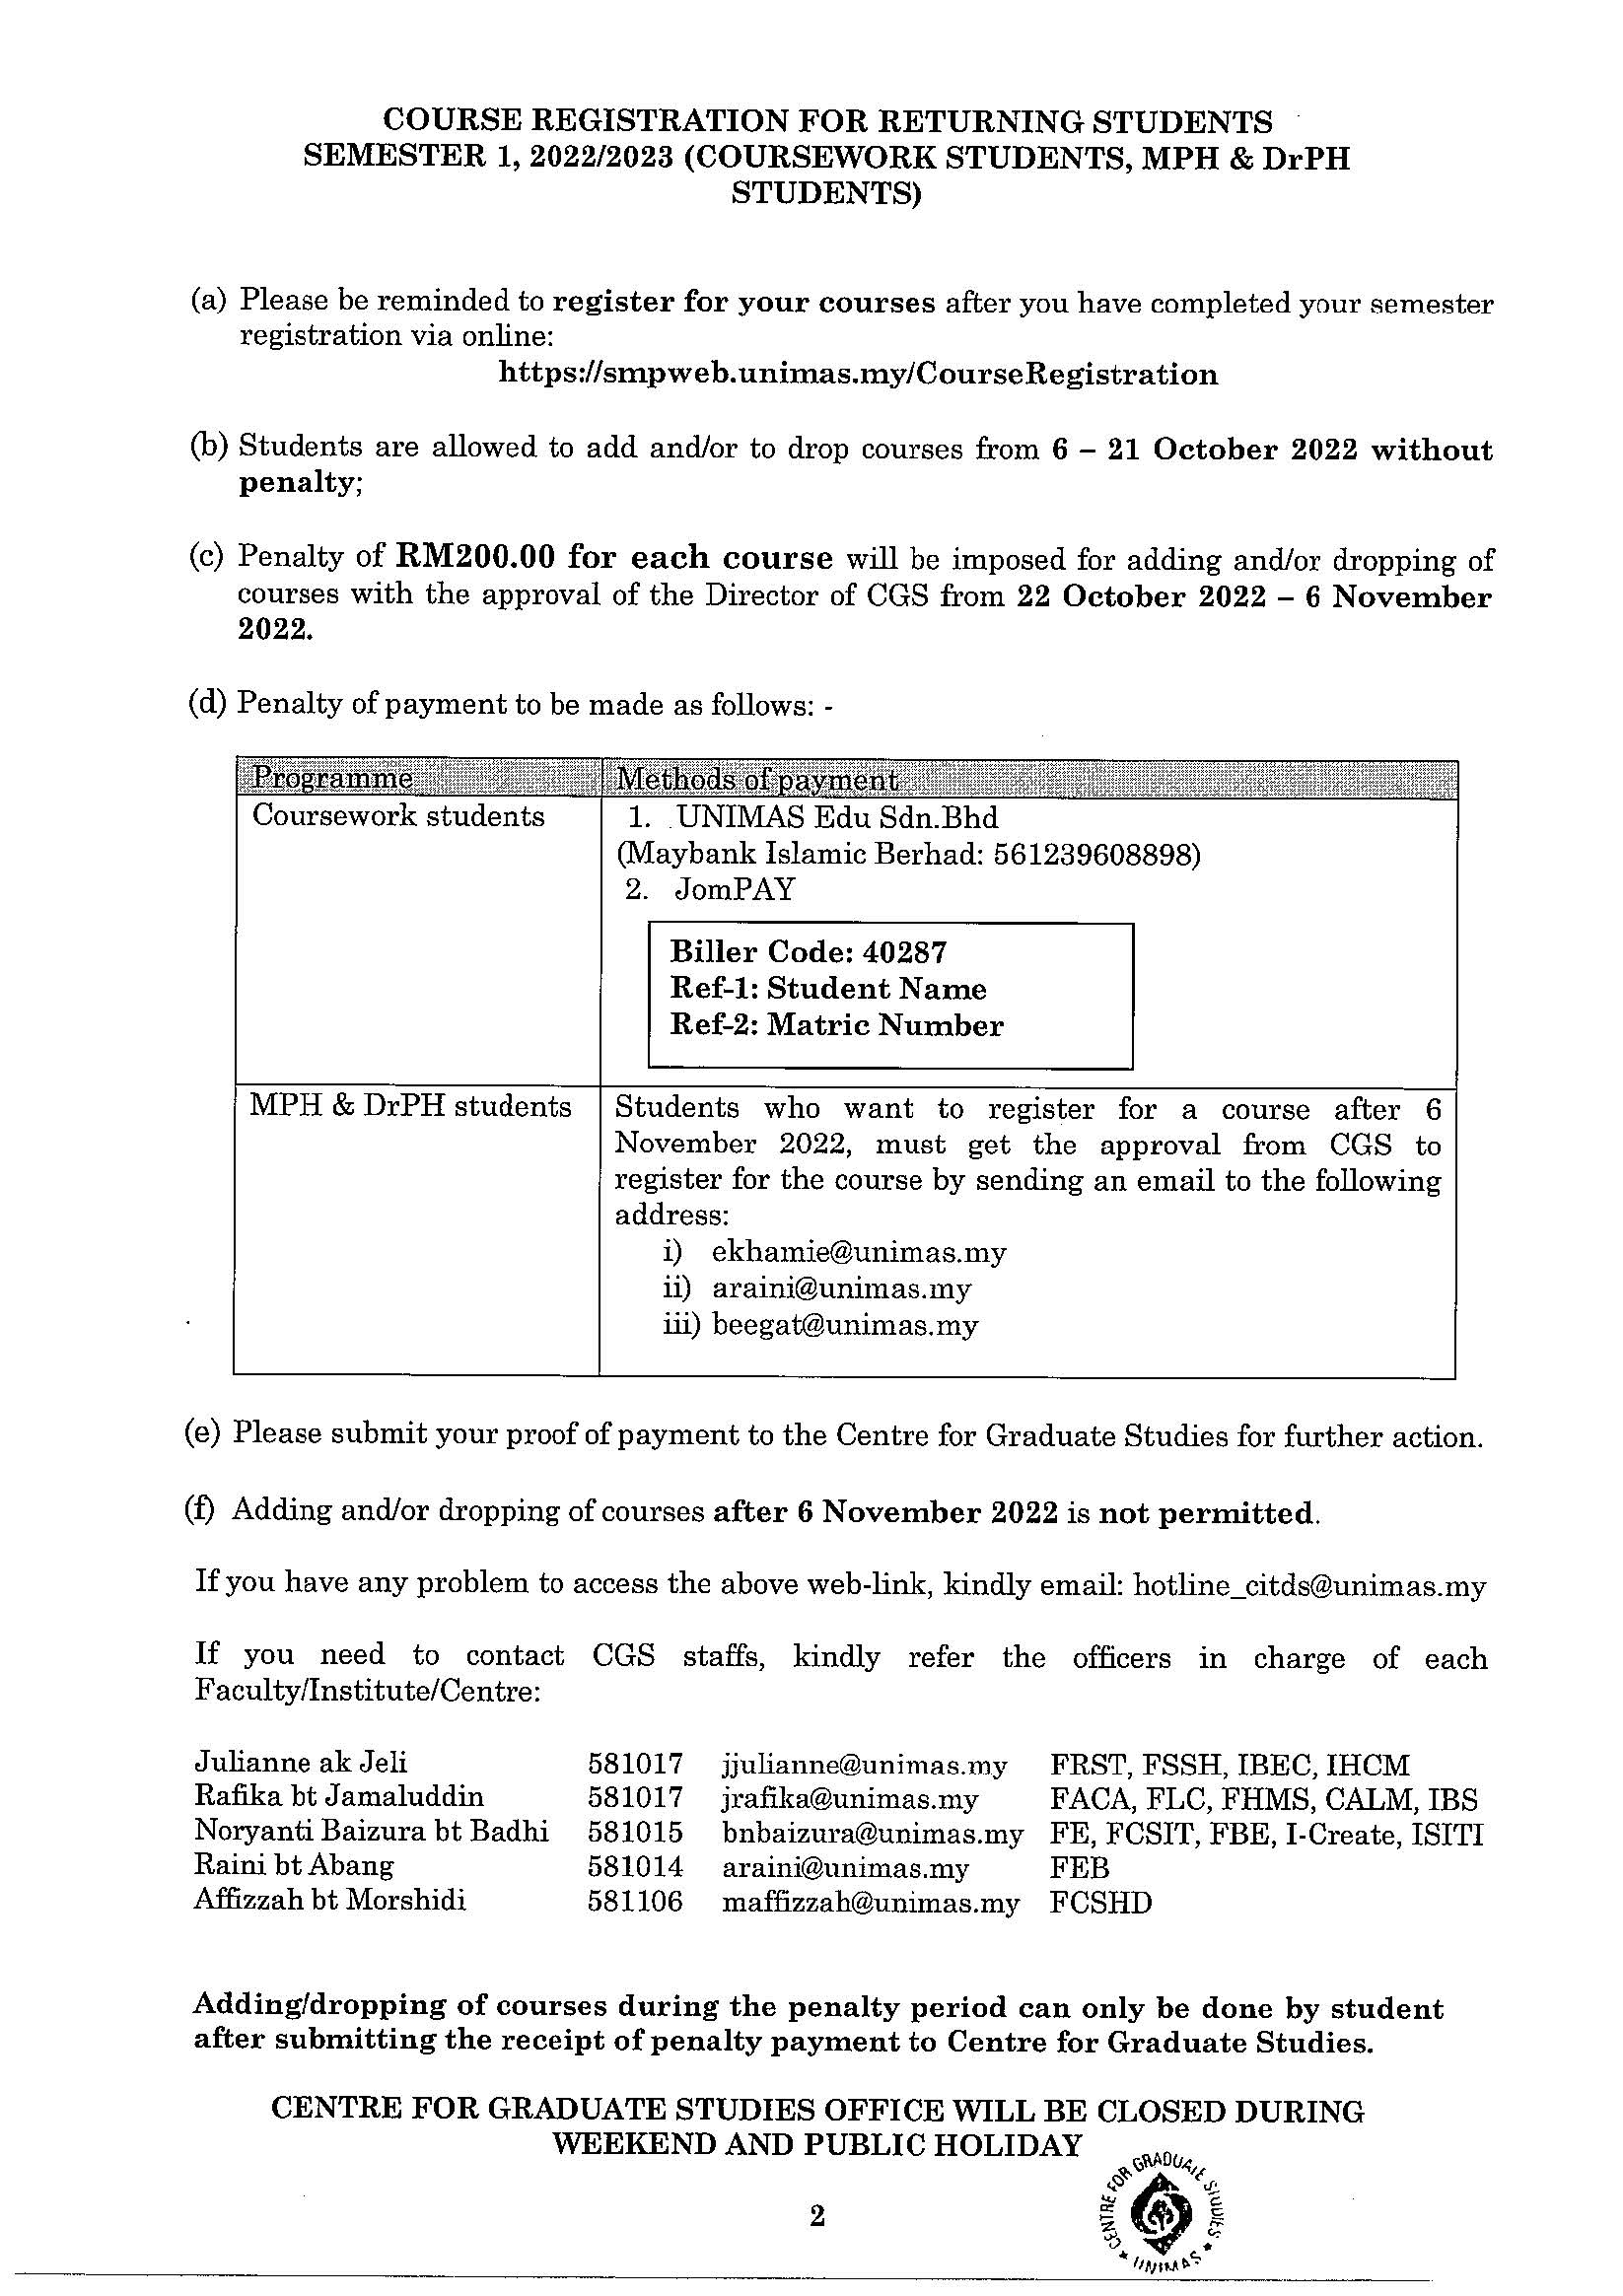 amendments notice of course registration for returning student Sem 1 2022 2023 (CW MPH  DrPH).jpg